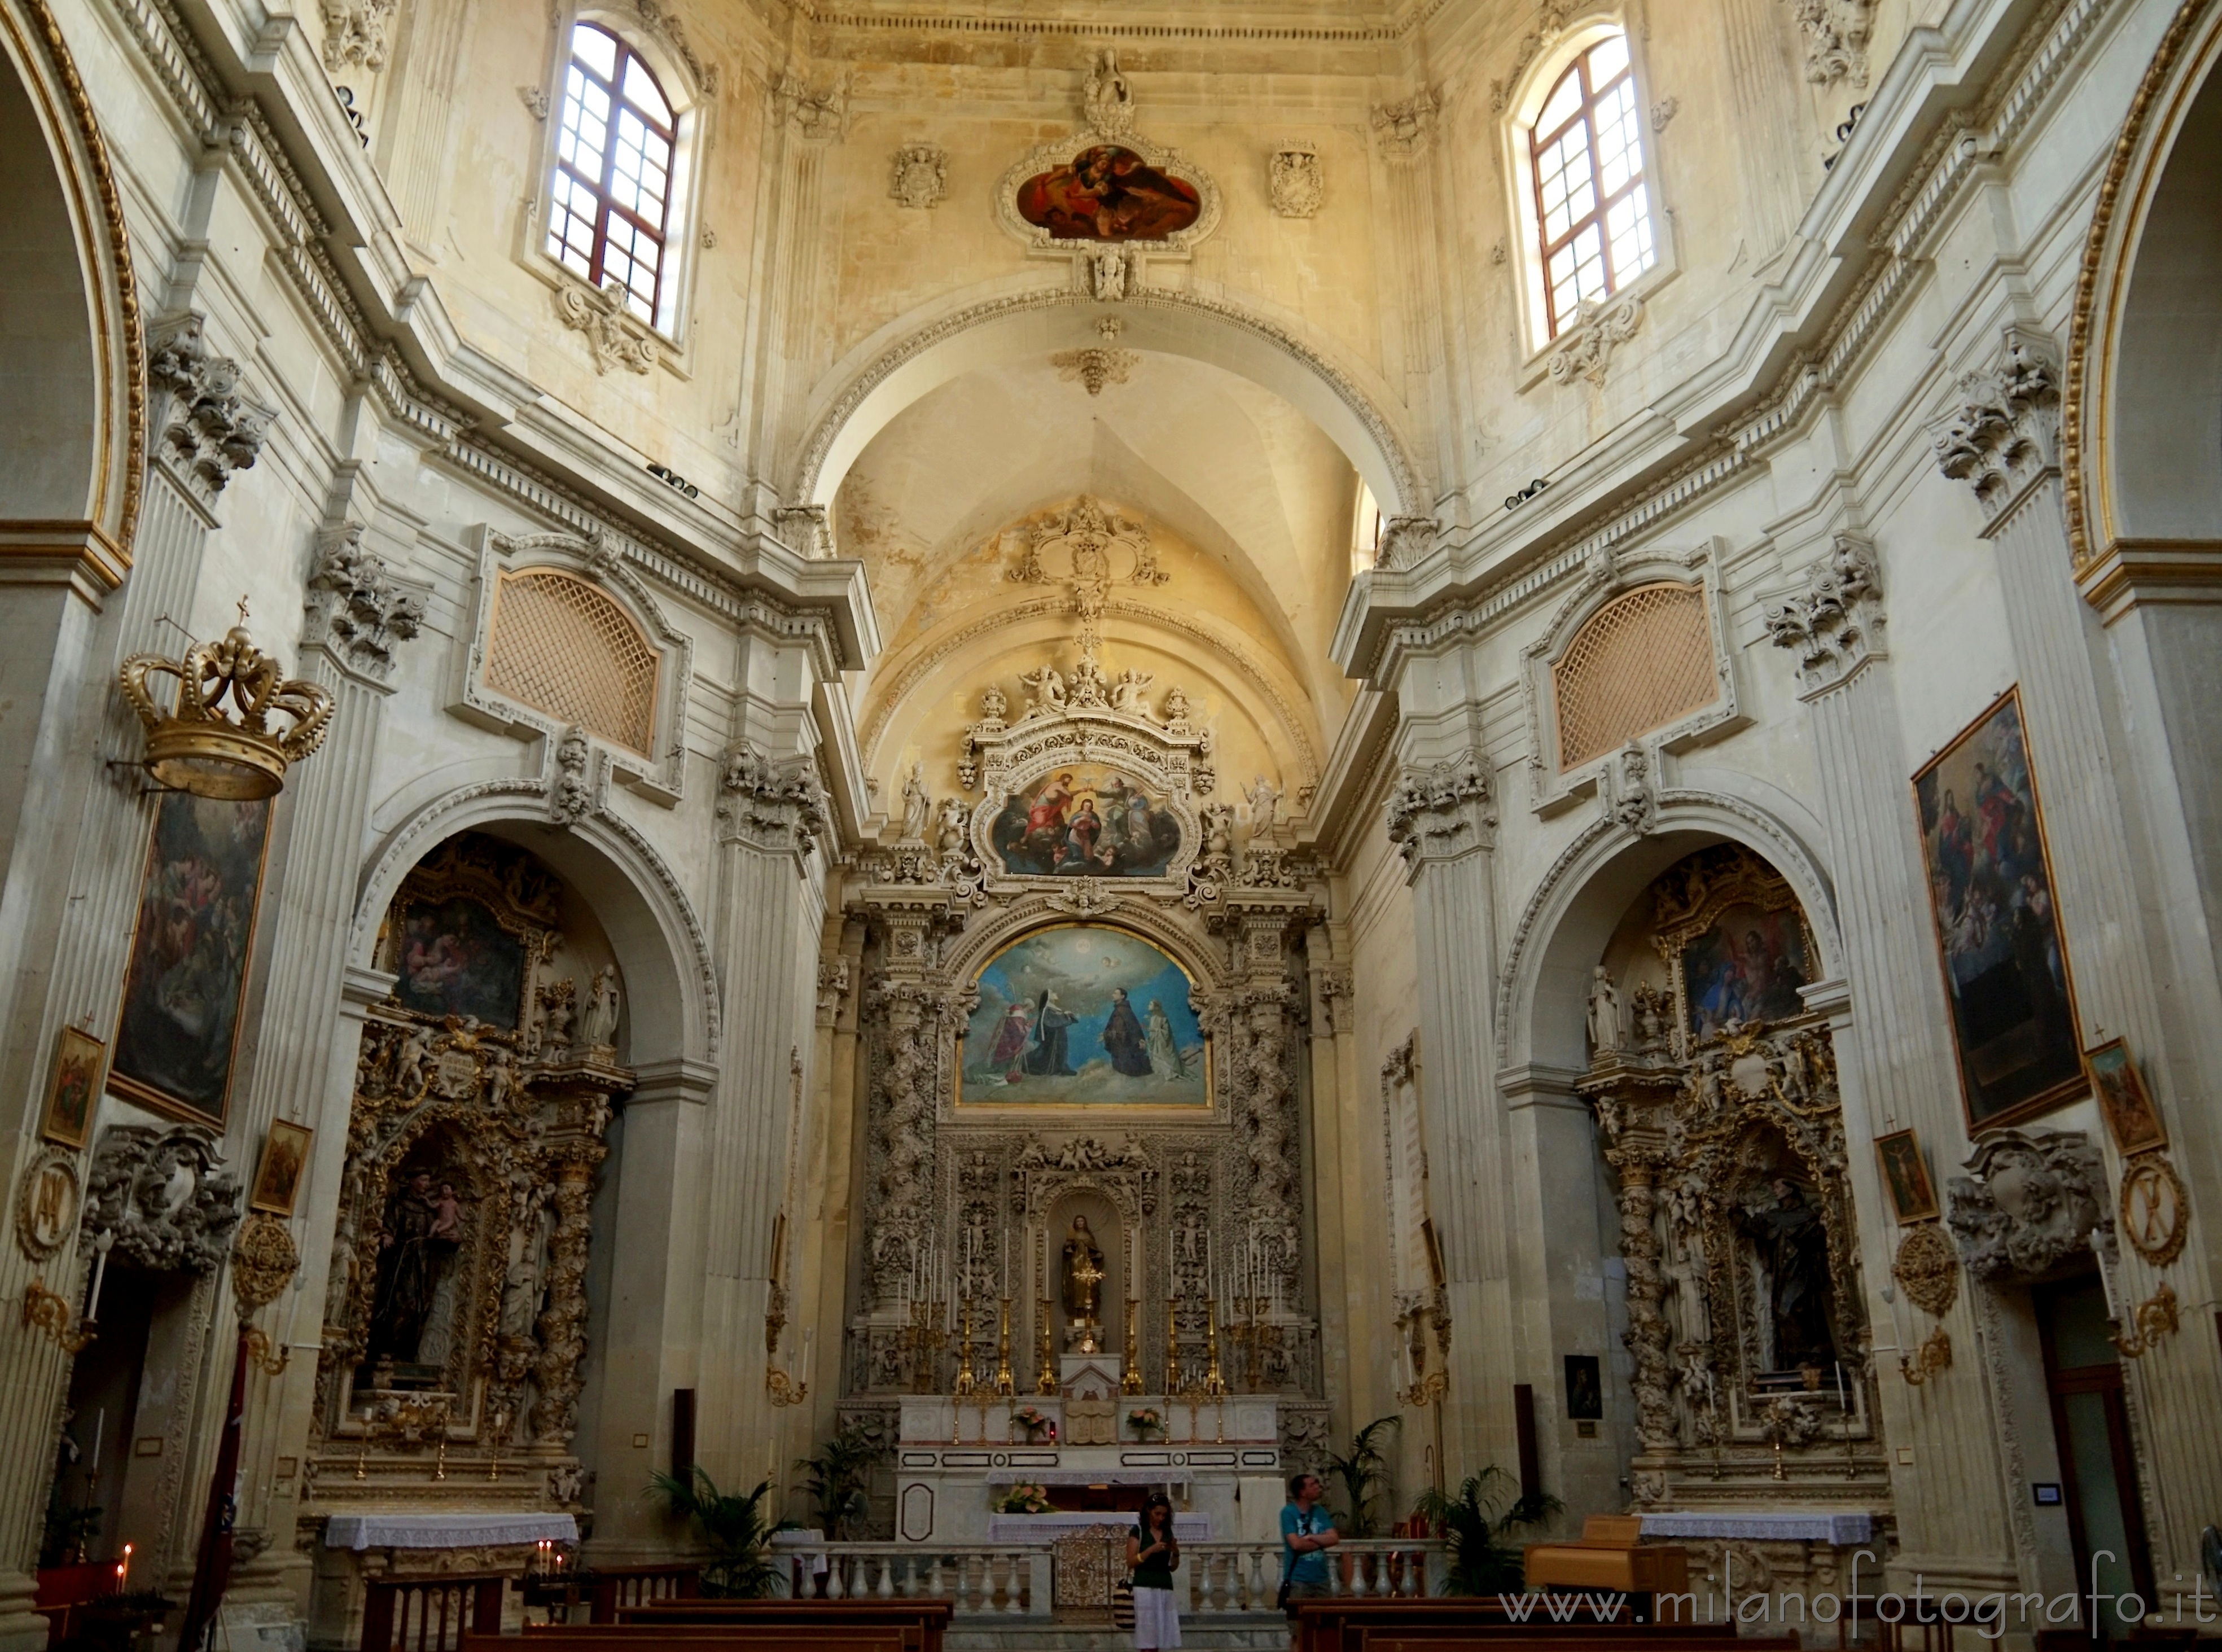 Lecce (Italy): Interior of the Church of Santa Chiara - Lecce (Italy)